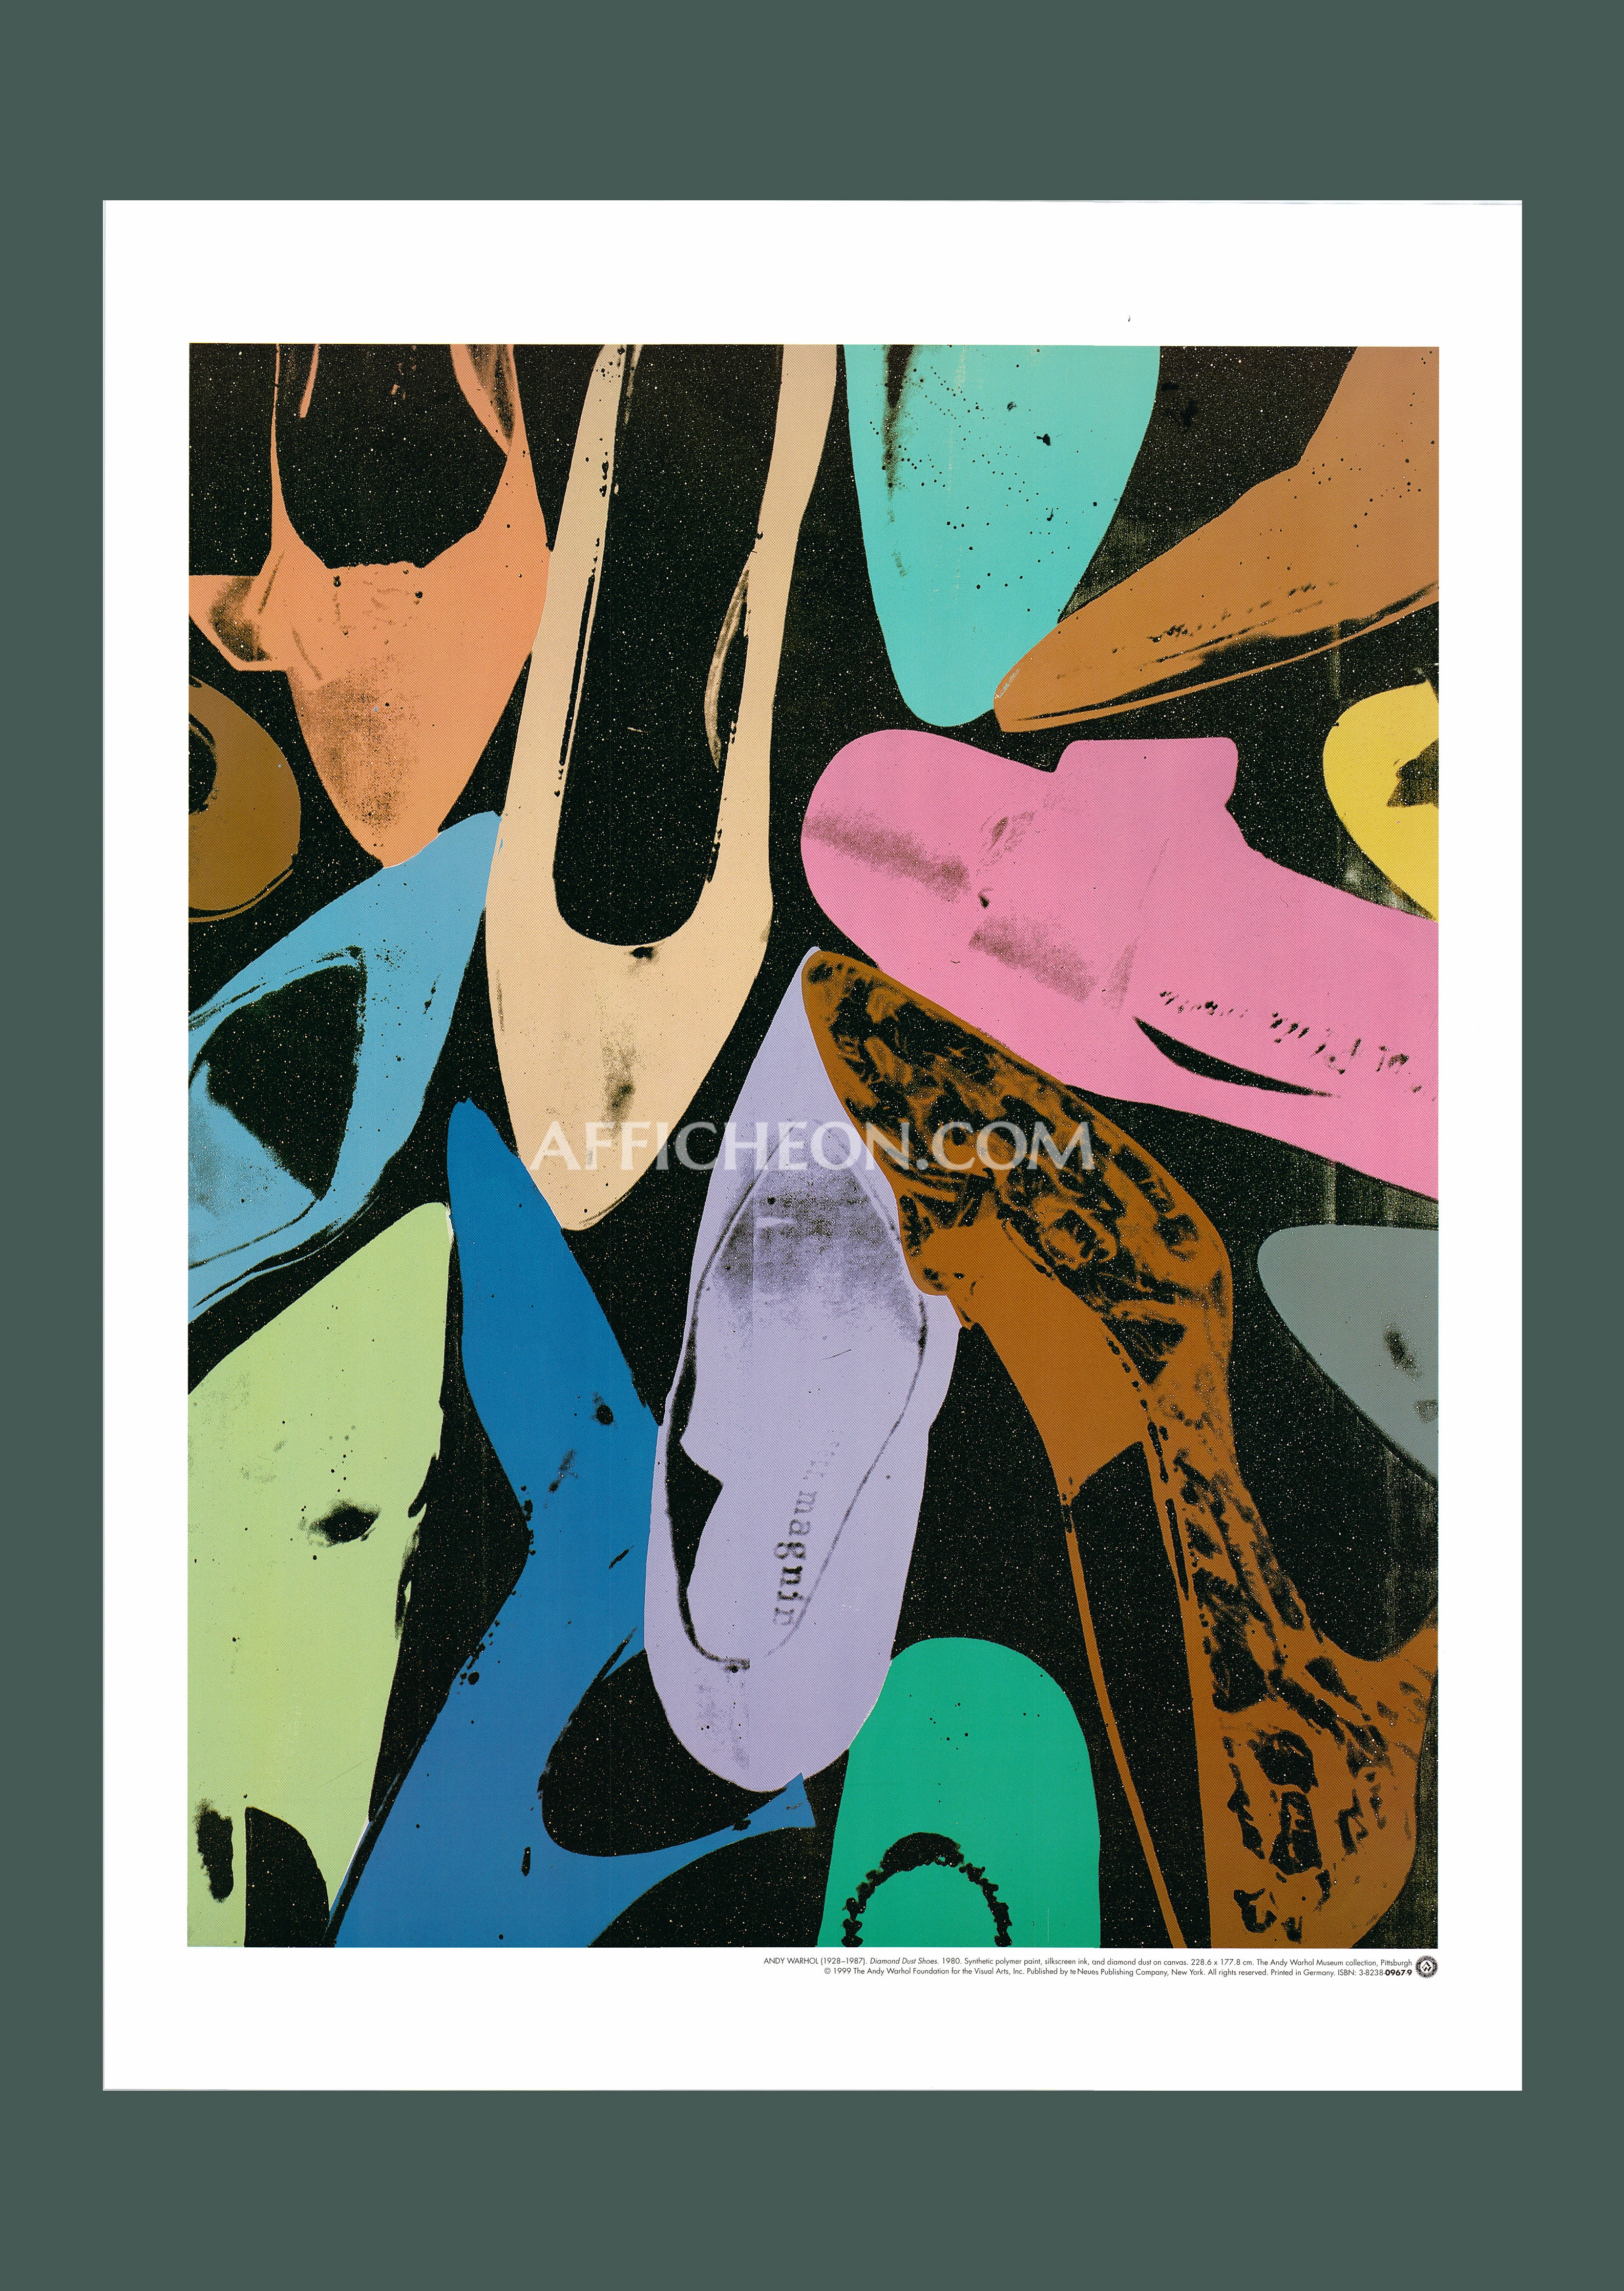 Andy Warhol 'Diamond Dust Shoes' 1999 Original Exhibition Poster Print –  Afficheon